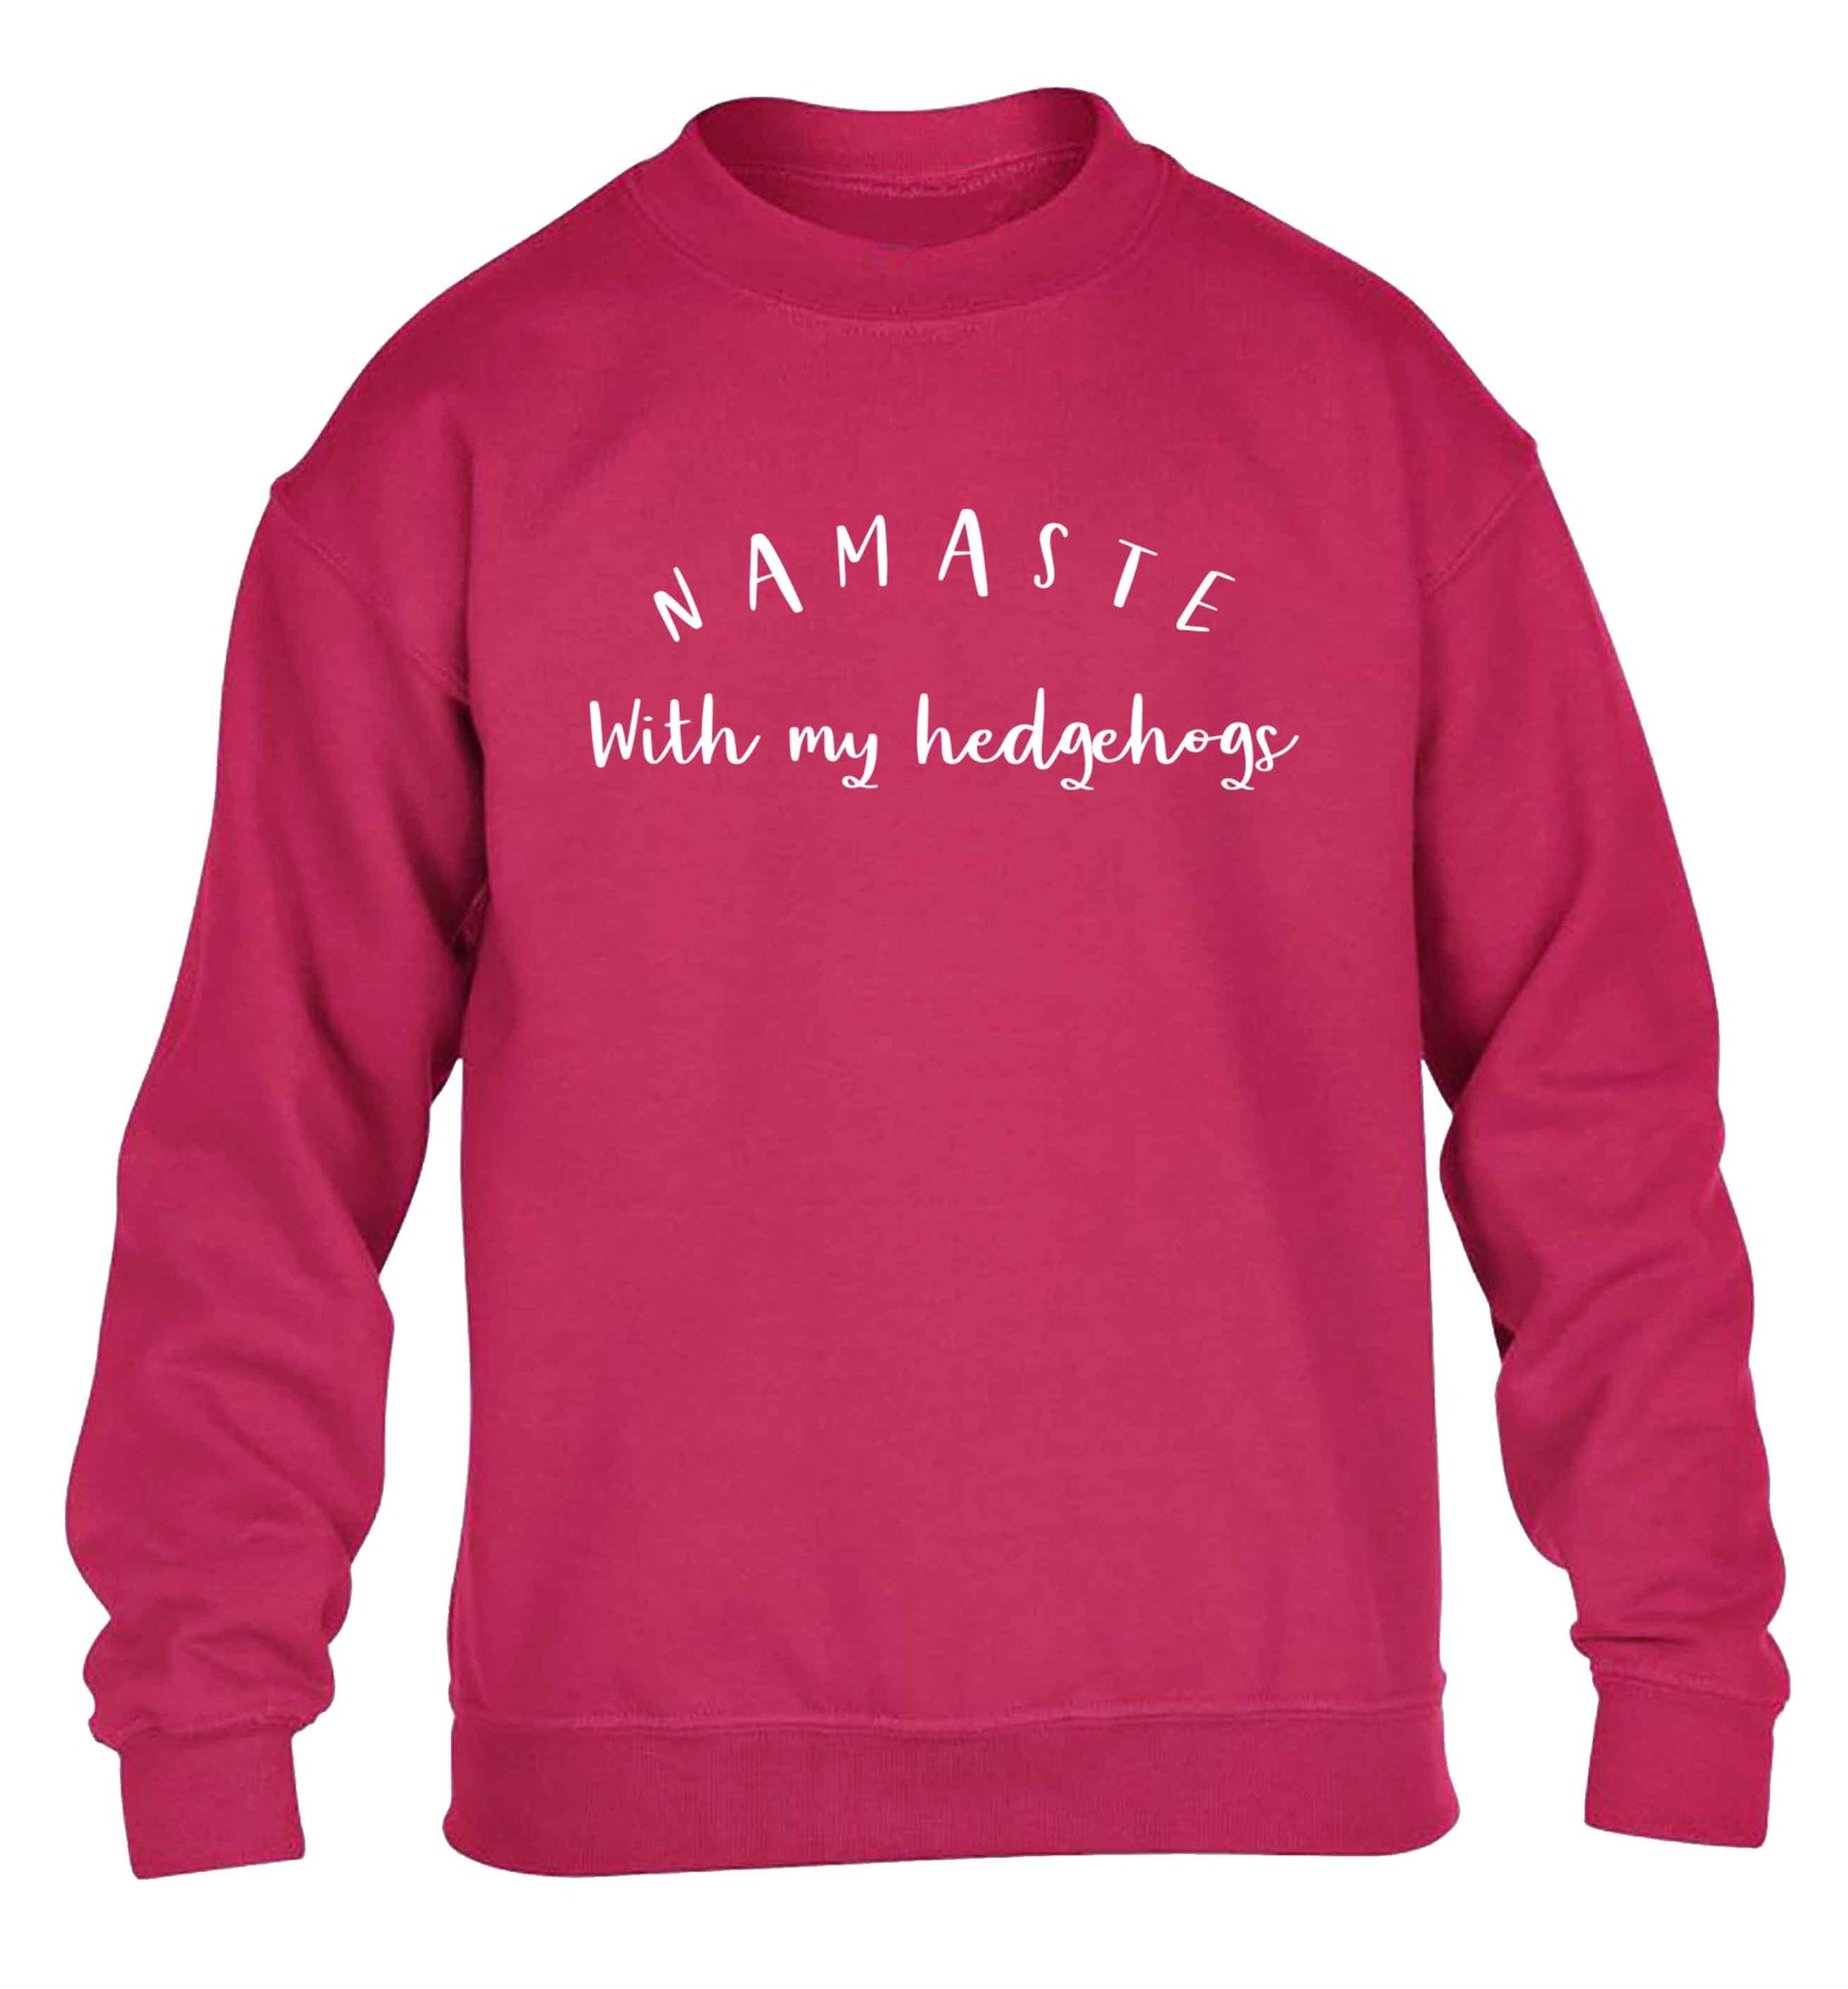 Namaste with my hedgehog children's pink sweater 12-13 Years